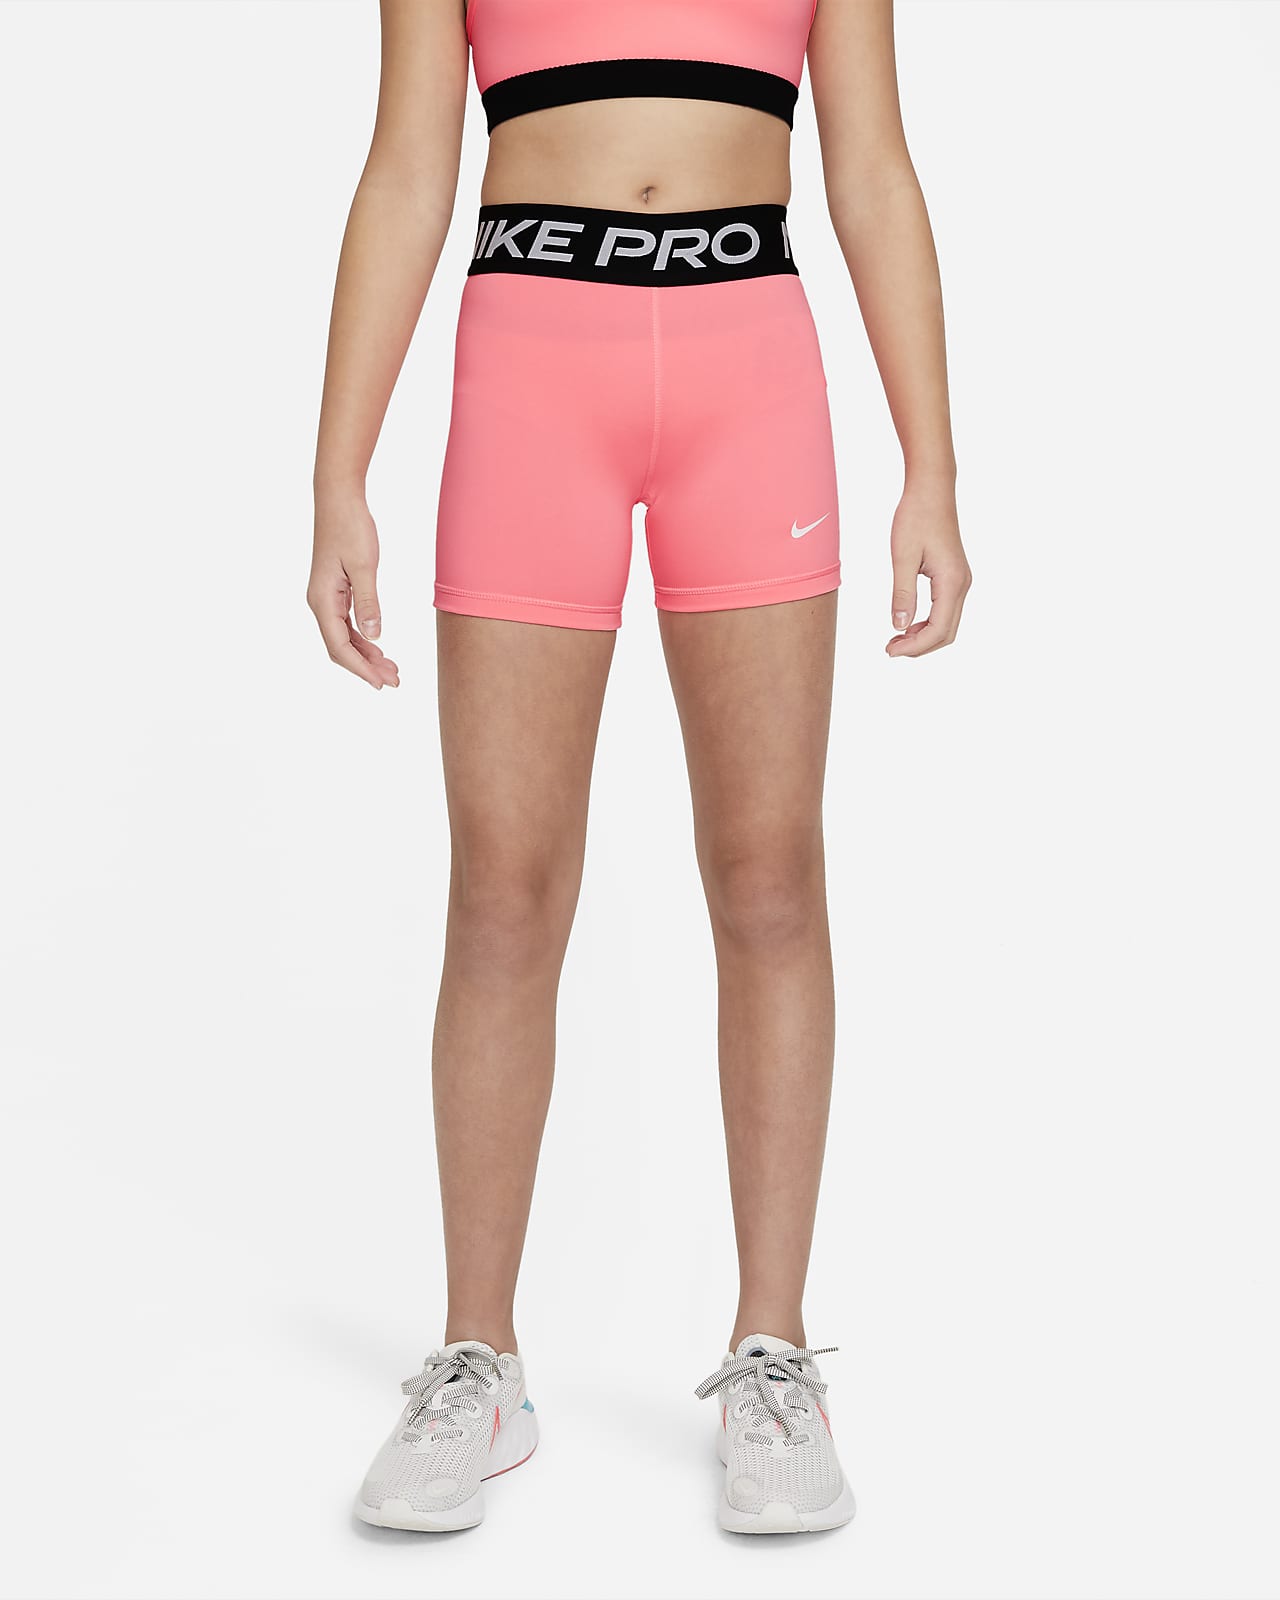 Nike Pro Older Kids' (Girls') 8cm (approx.) Shorts